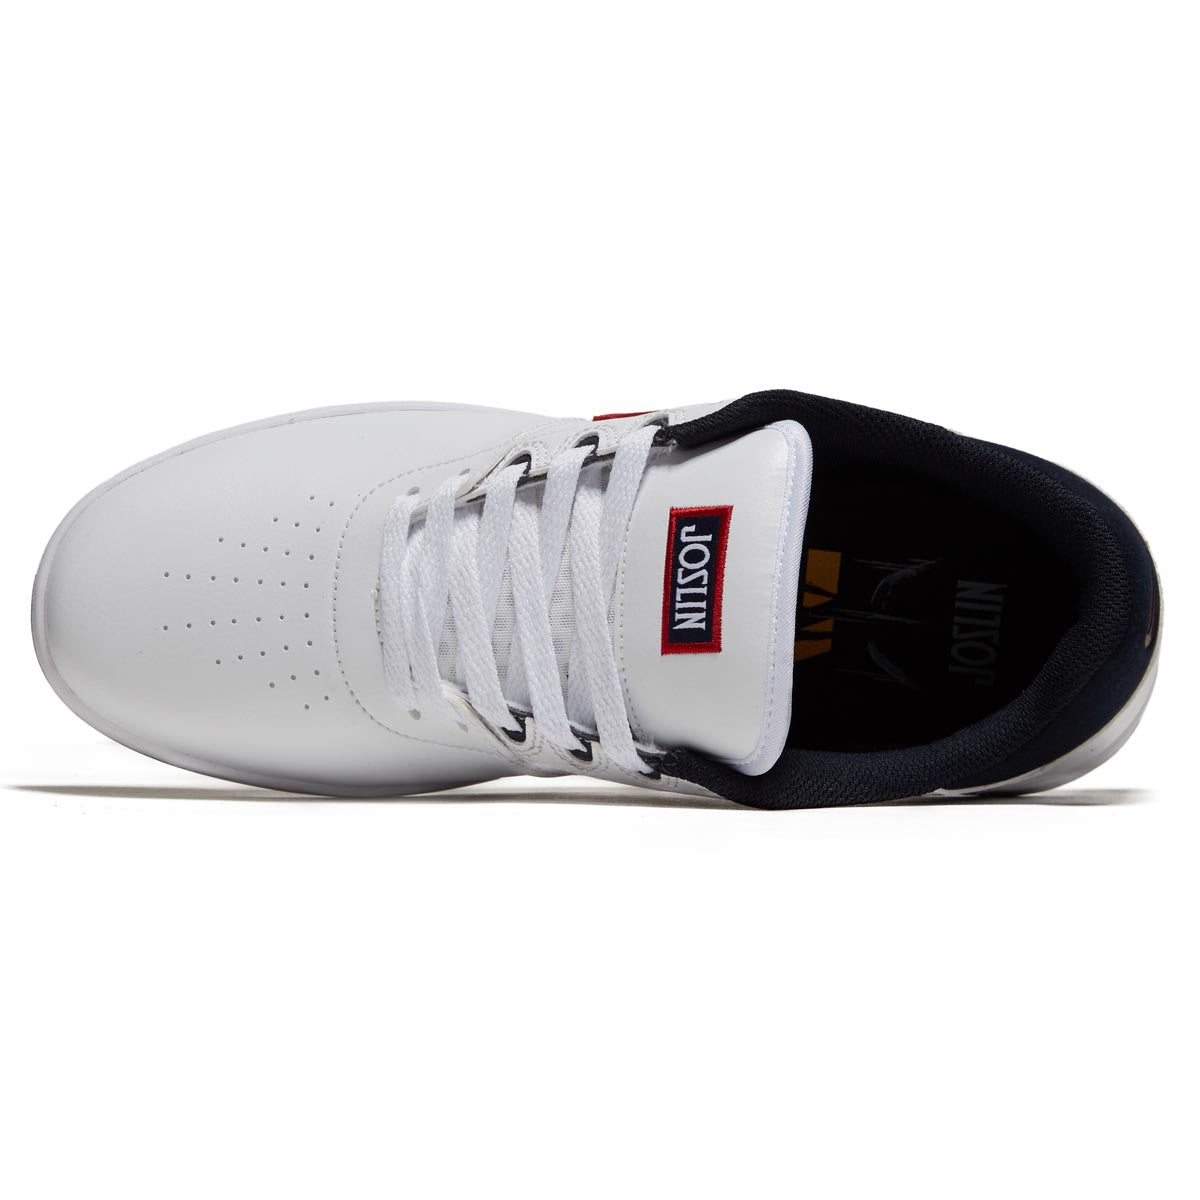 Etnies Josl1n Shoes - White/Navy/Red image 3